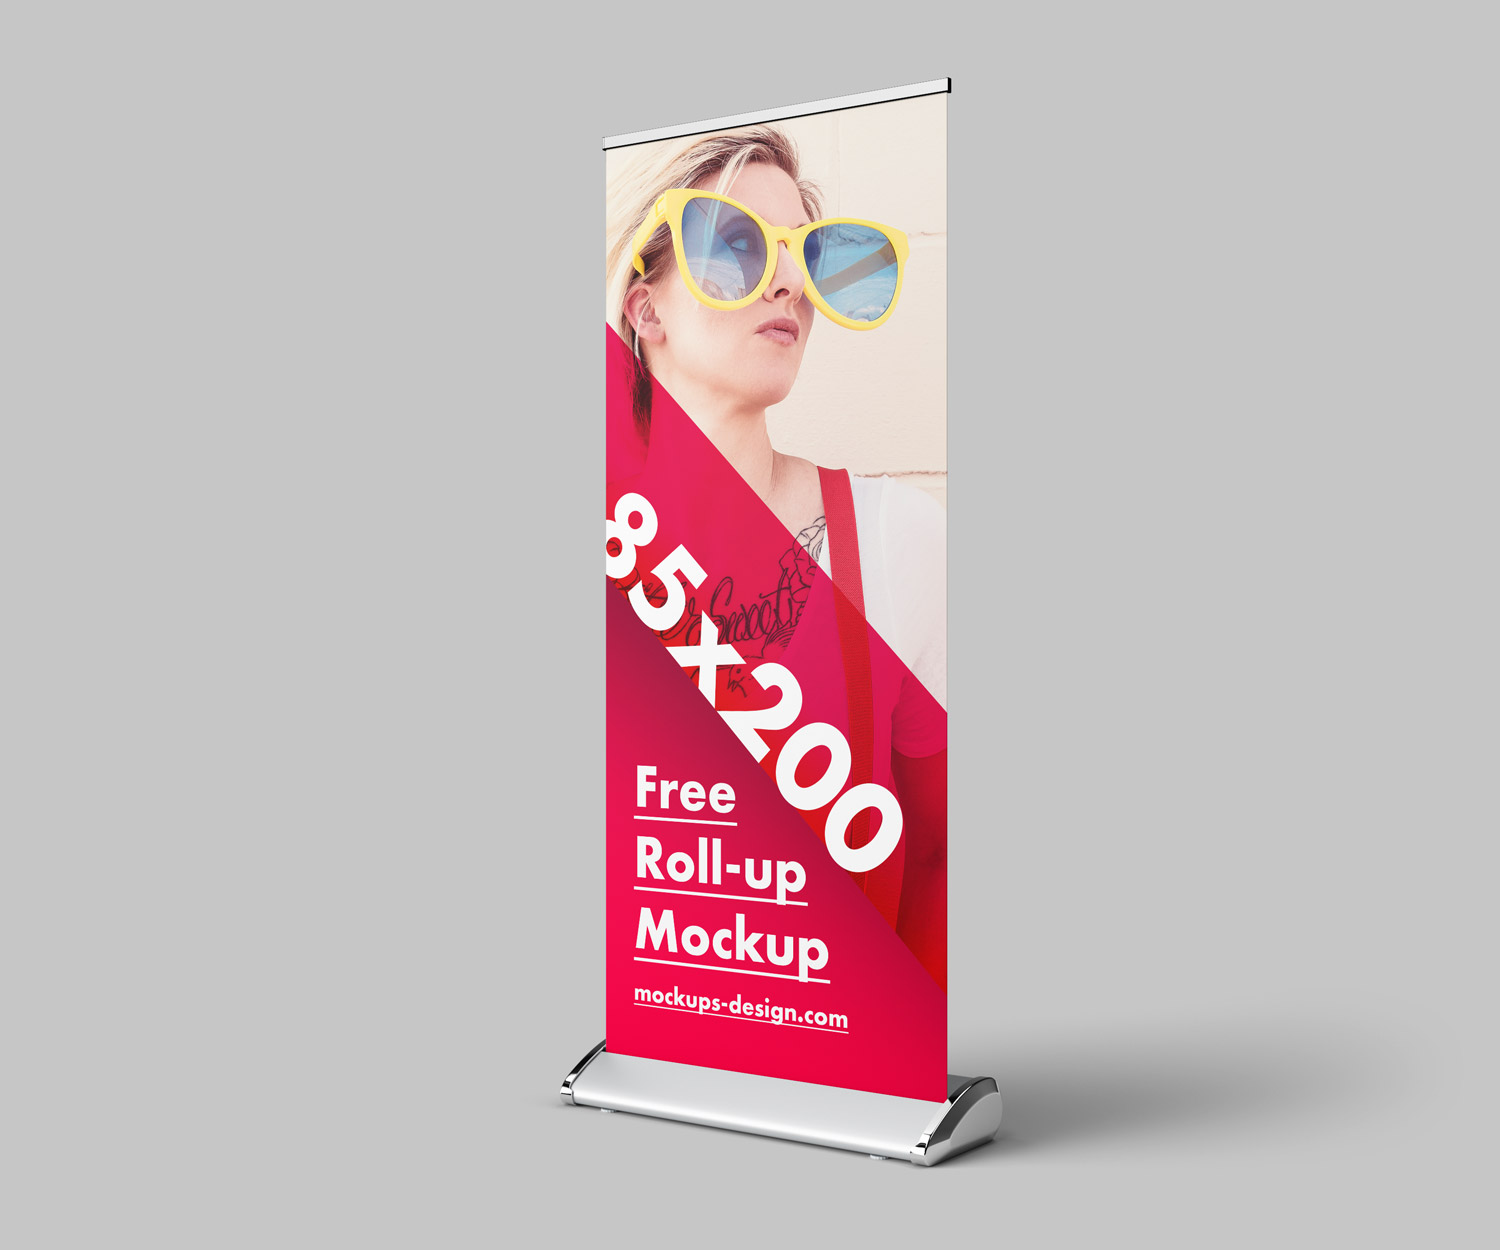 Download Free Roll-up Mockup / 85×200 cm | Free Mockup